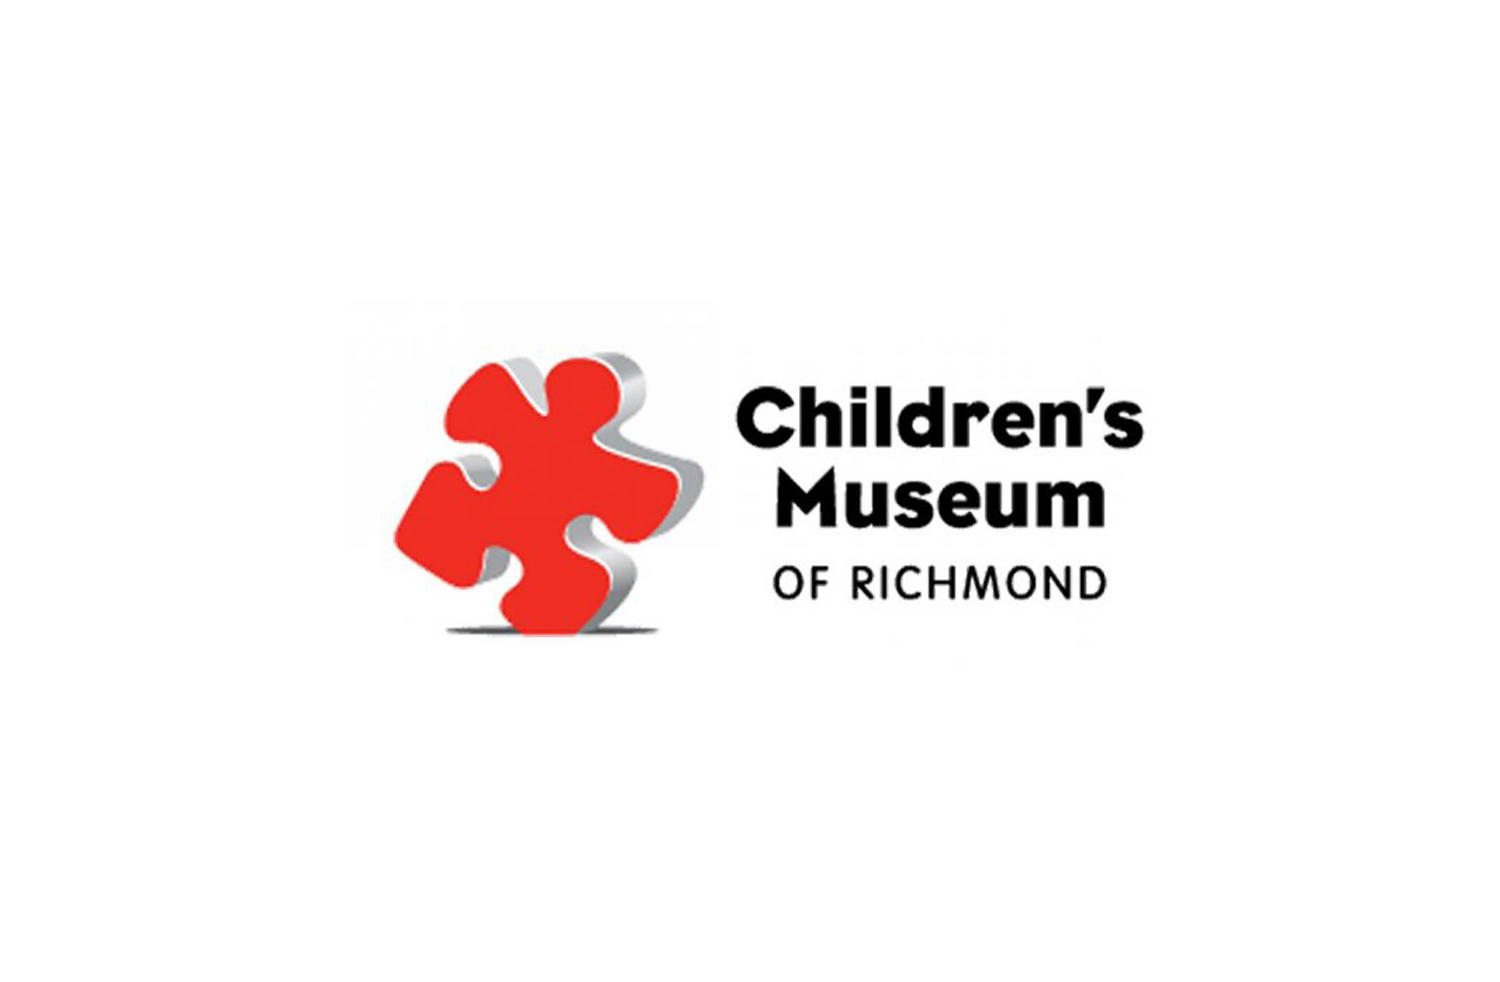 Boss_Display_Client_Childrens_Museum_of_Richmond_Logo.jpg